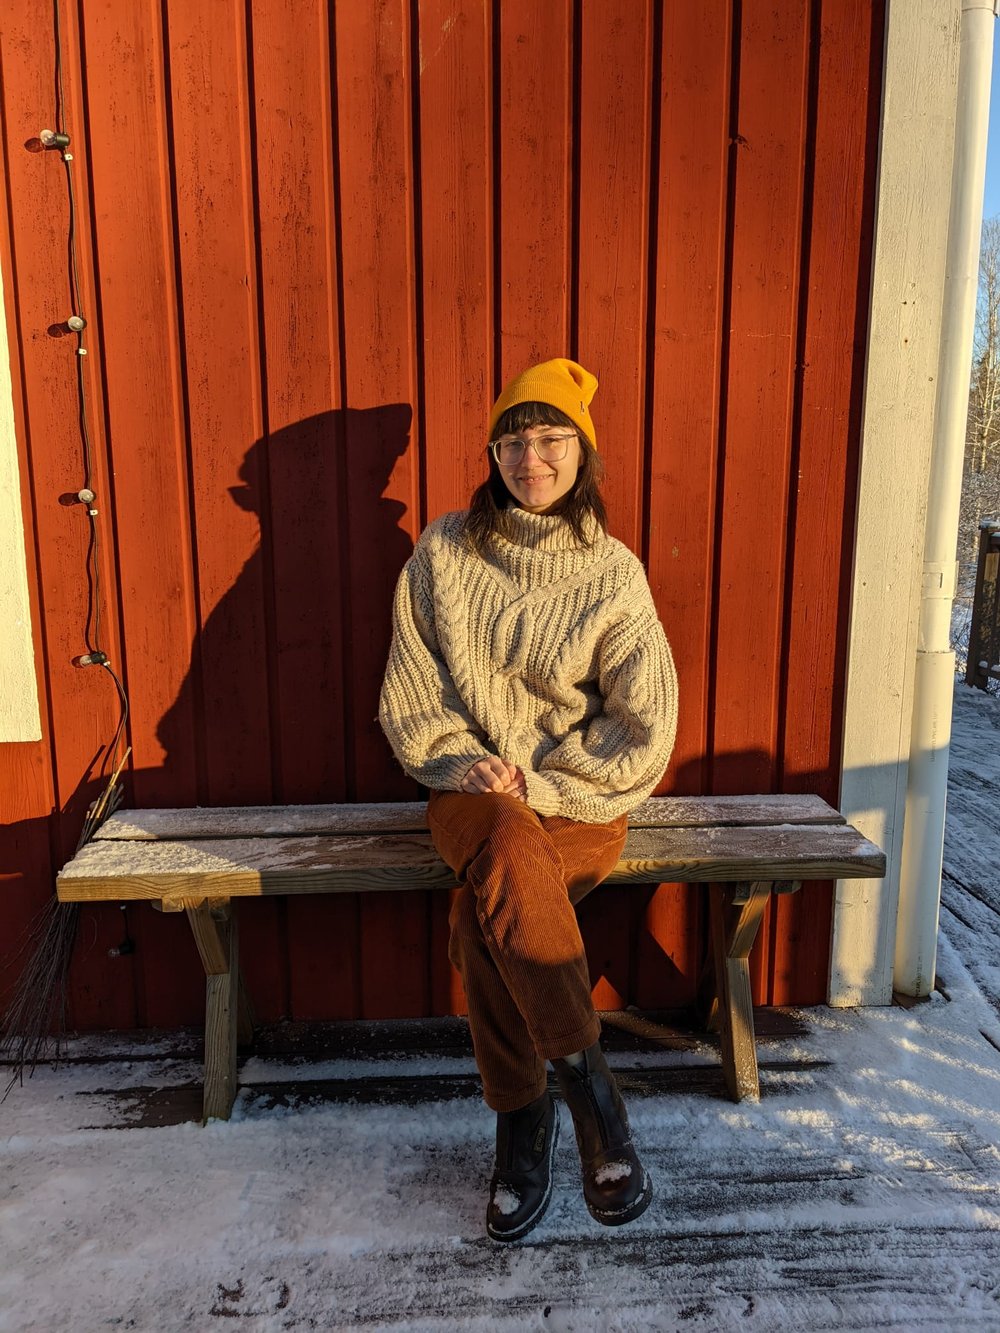 Nadia in Sweden enjoying some winter sun. Photo: Nadia Henderson